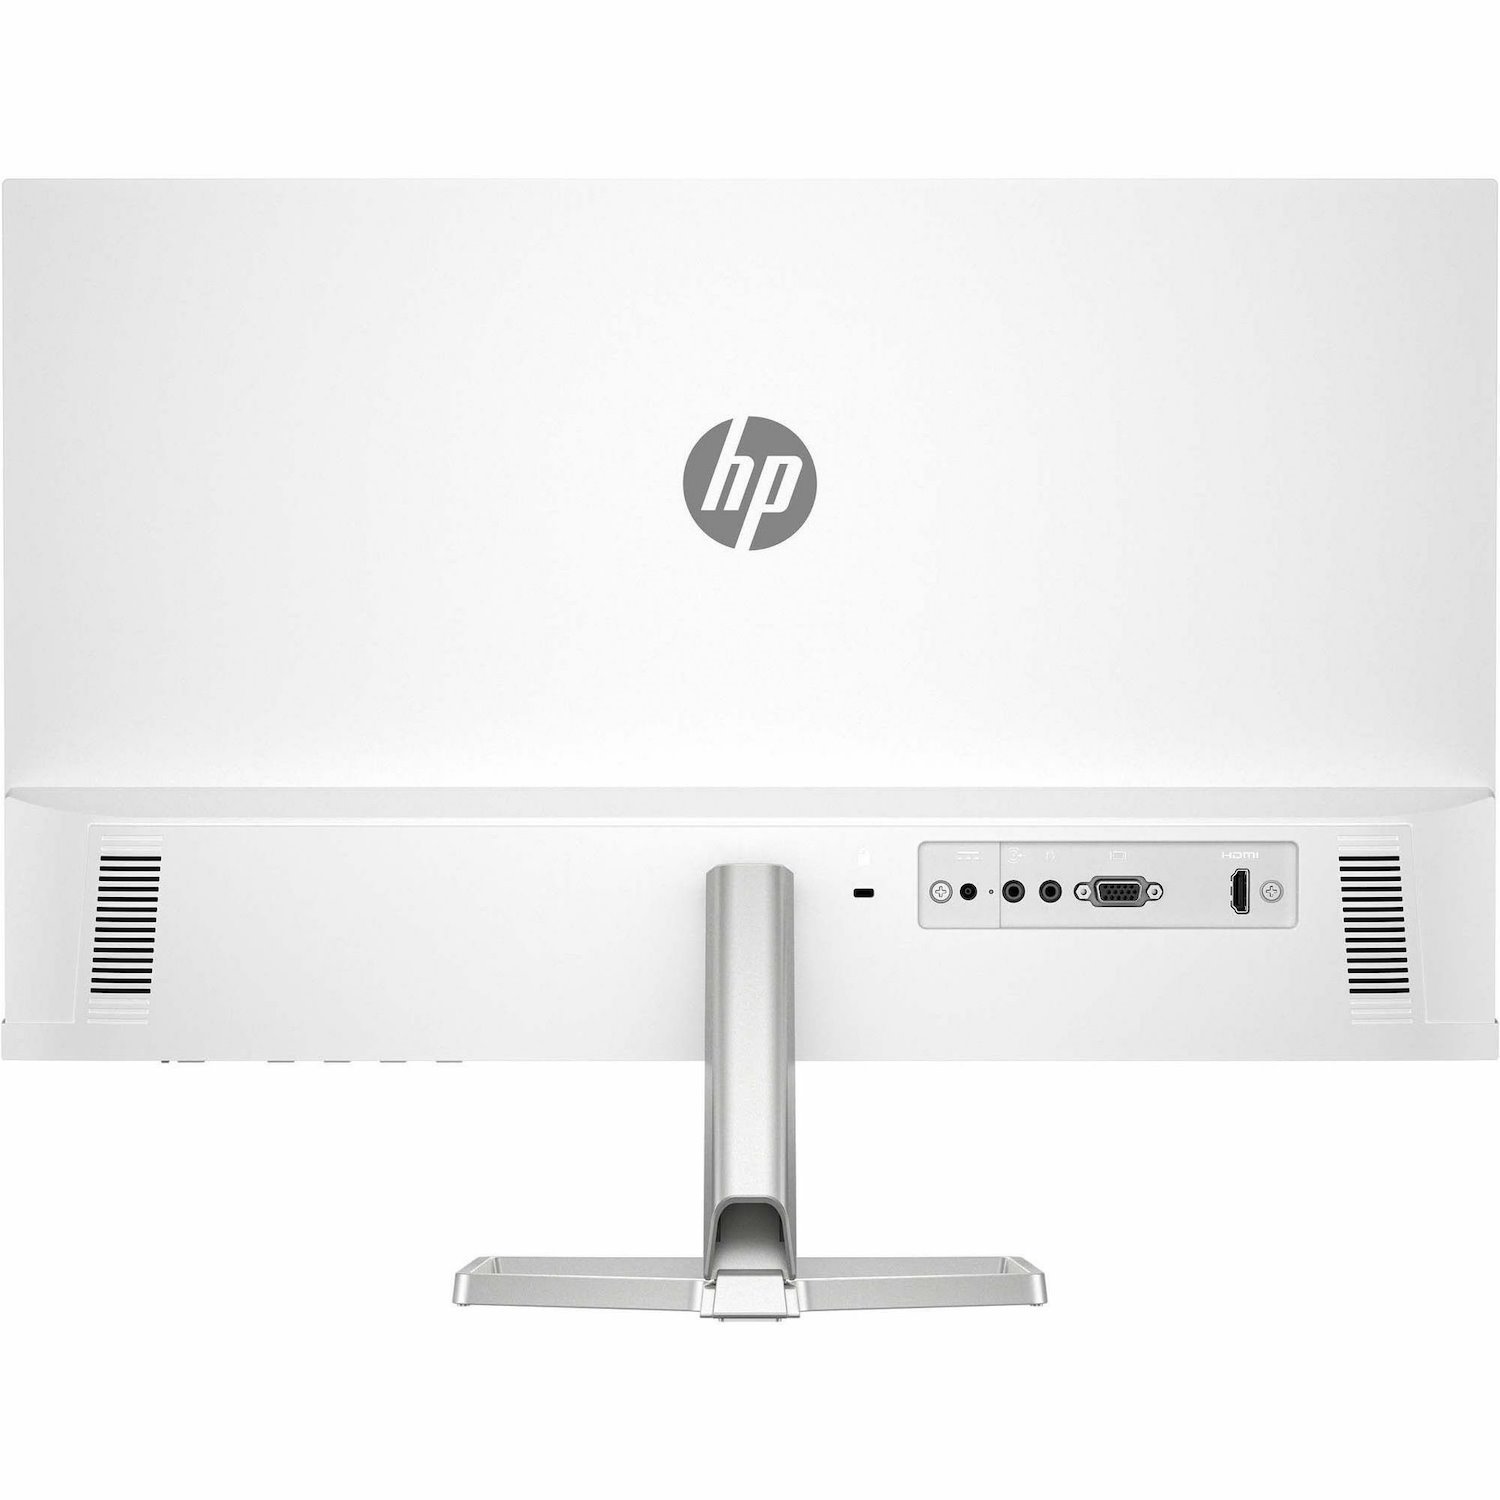 HP 524sa 24" Class Full HD LED Monitor - 16:9 - White